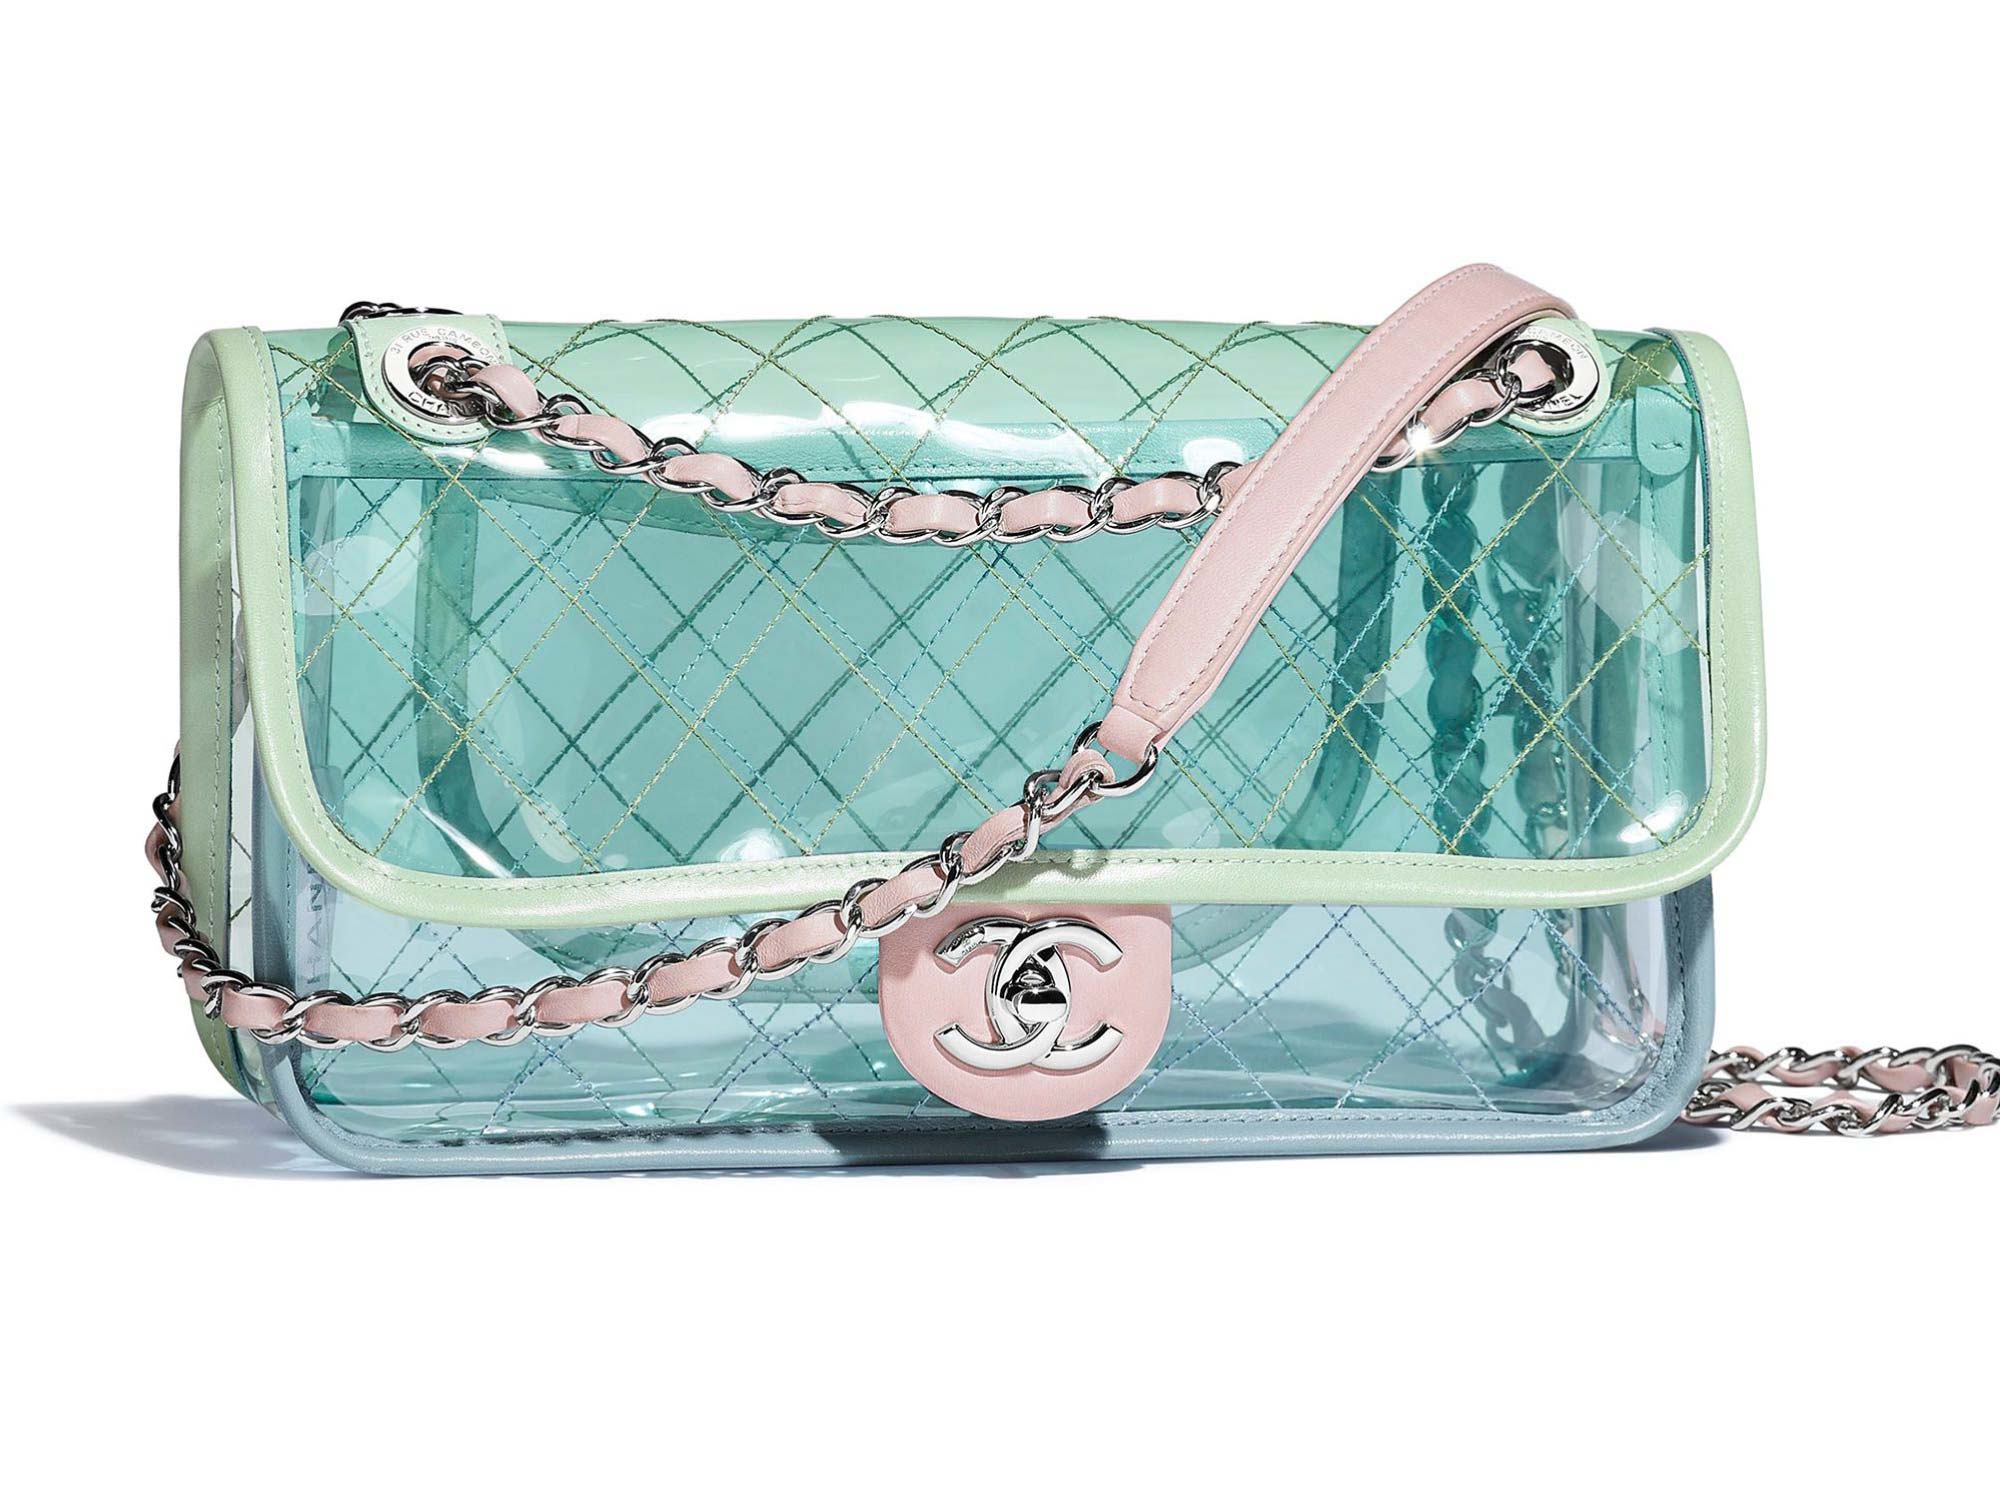 Chanel PVC & Leather Handbag